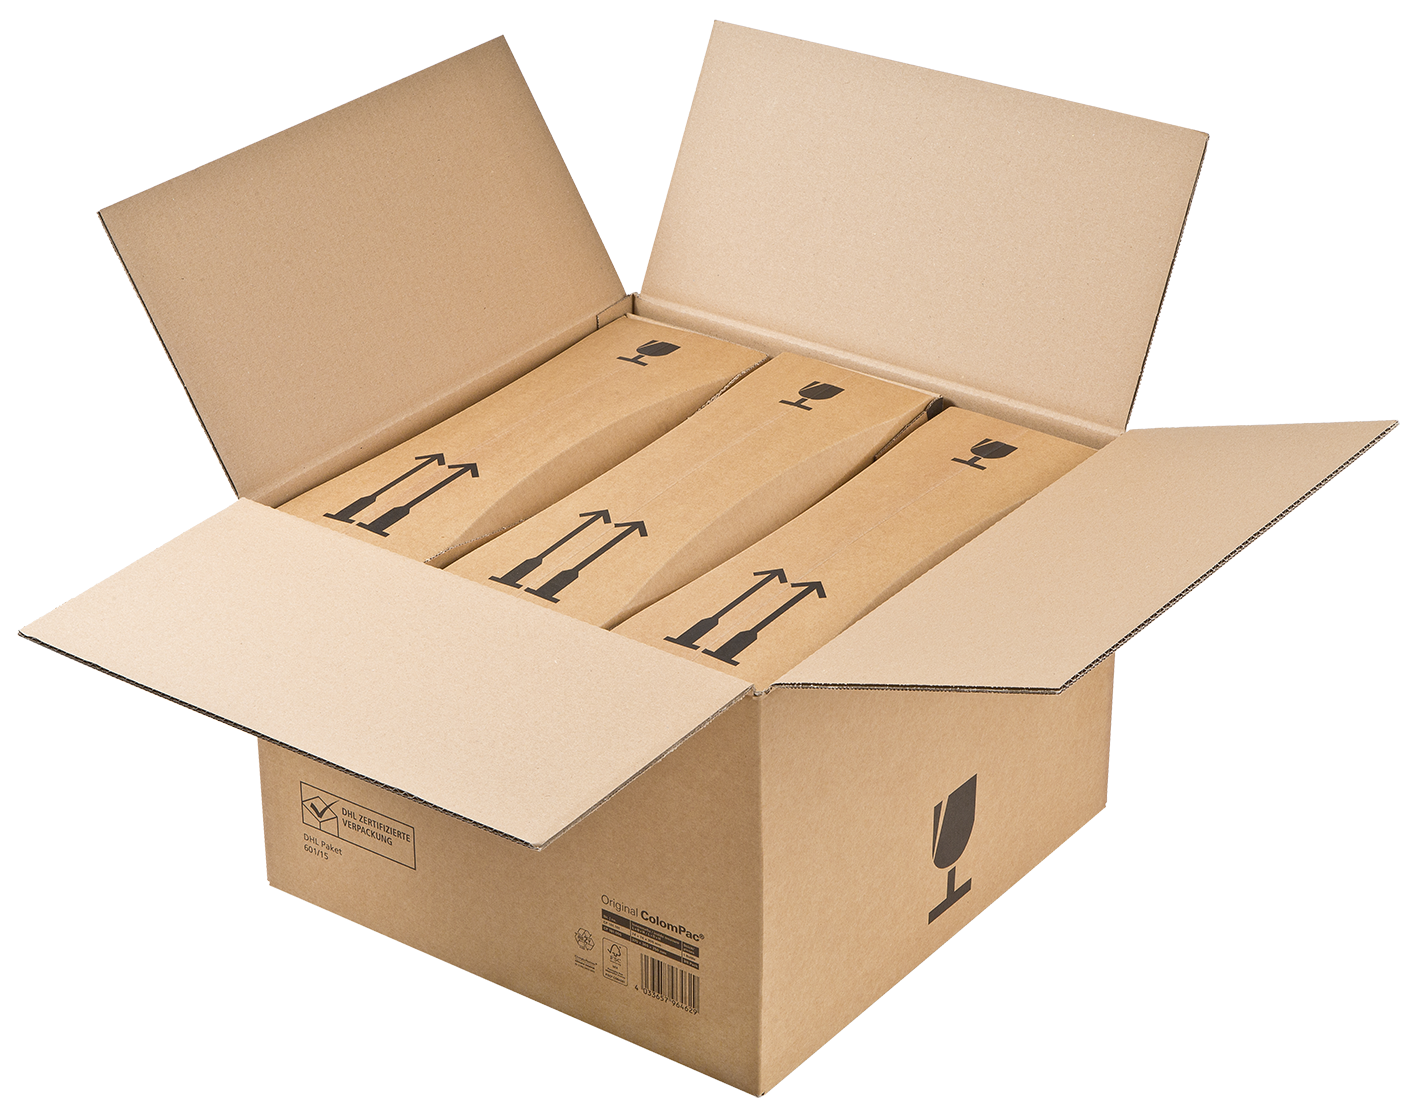 Cardboard separators for wine boxes - Packaging